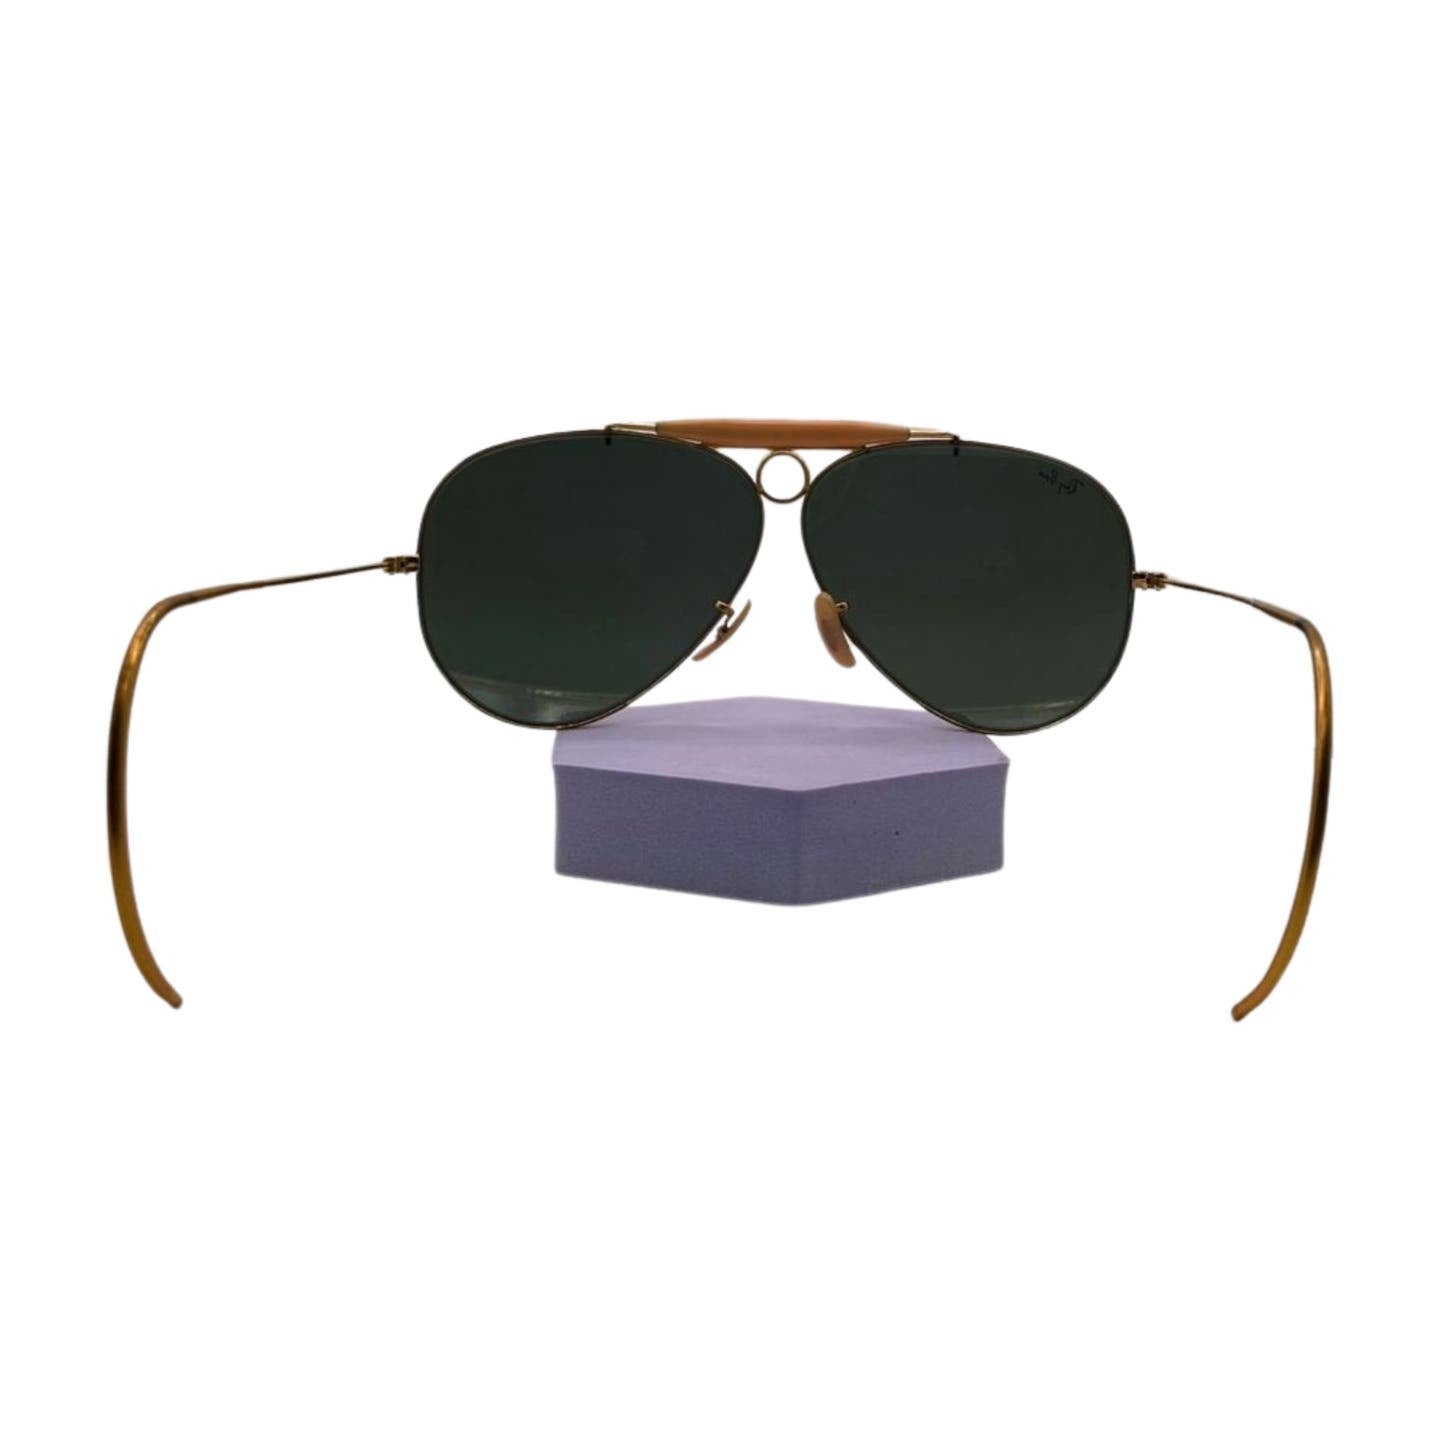 Vintage Ray Ban Shooter Aviator Sunglasses - Le Look